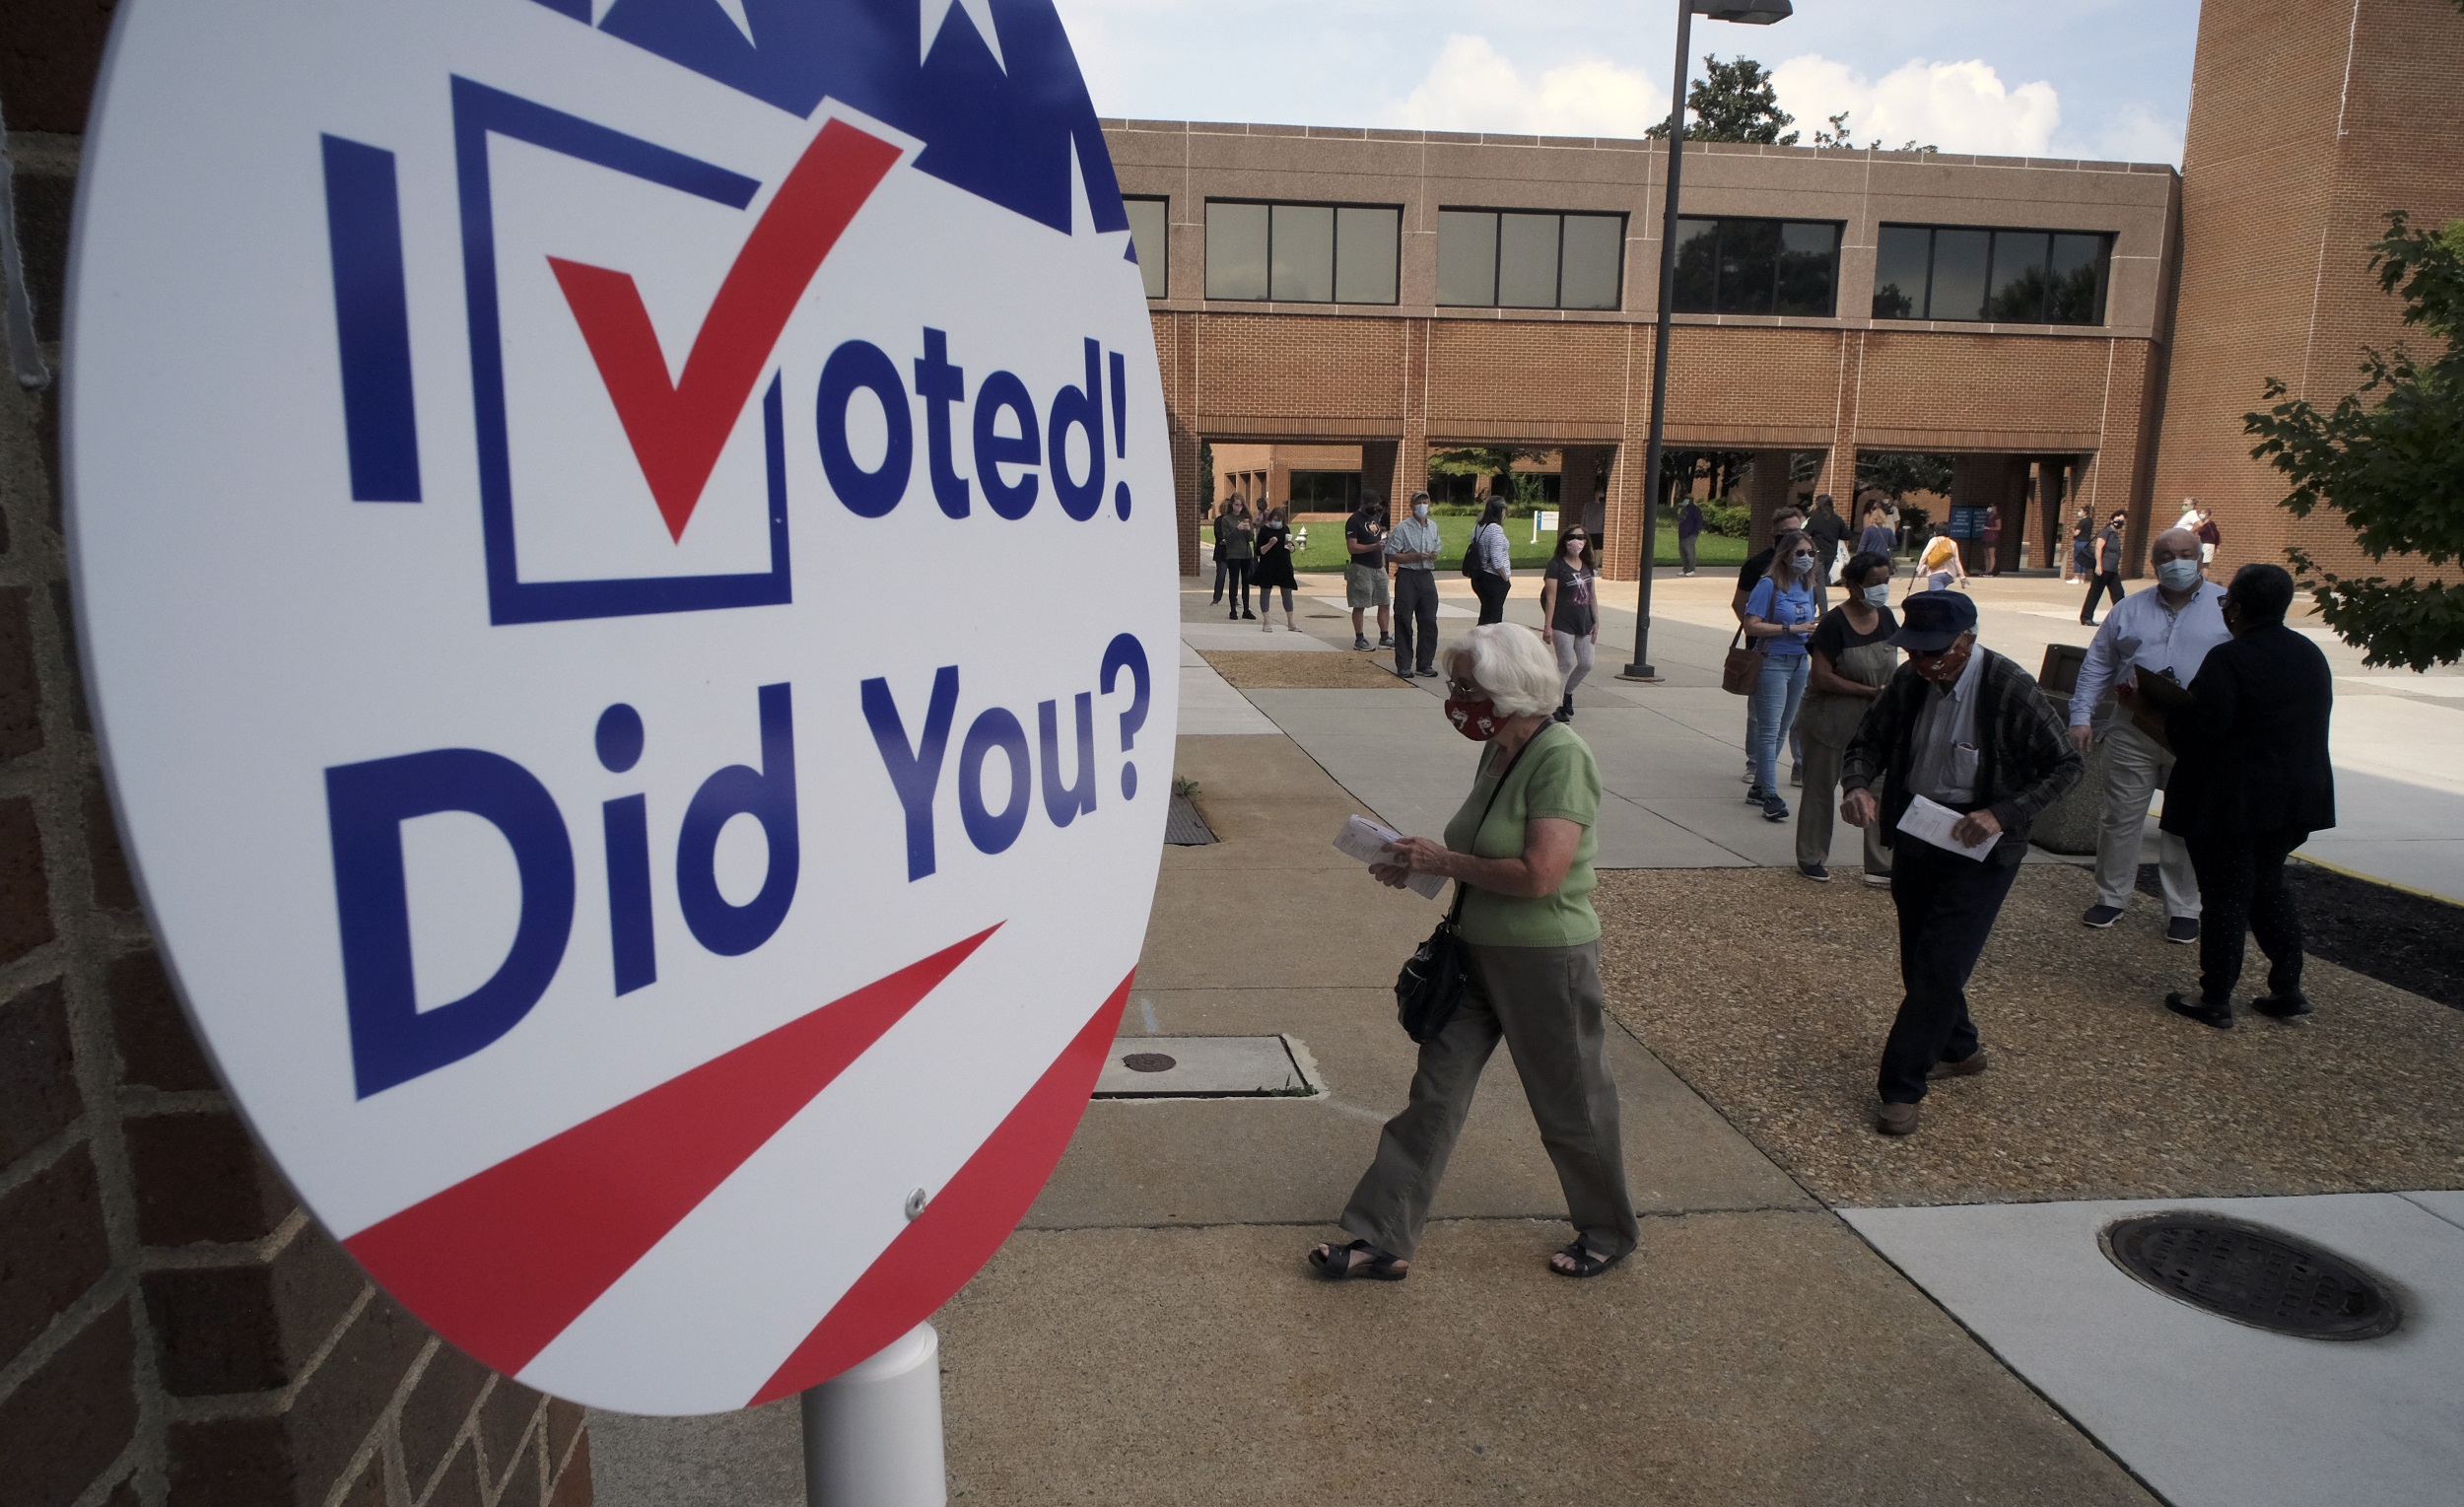 Judge Extends Virginia Voter Registration After Service Outage